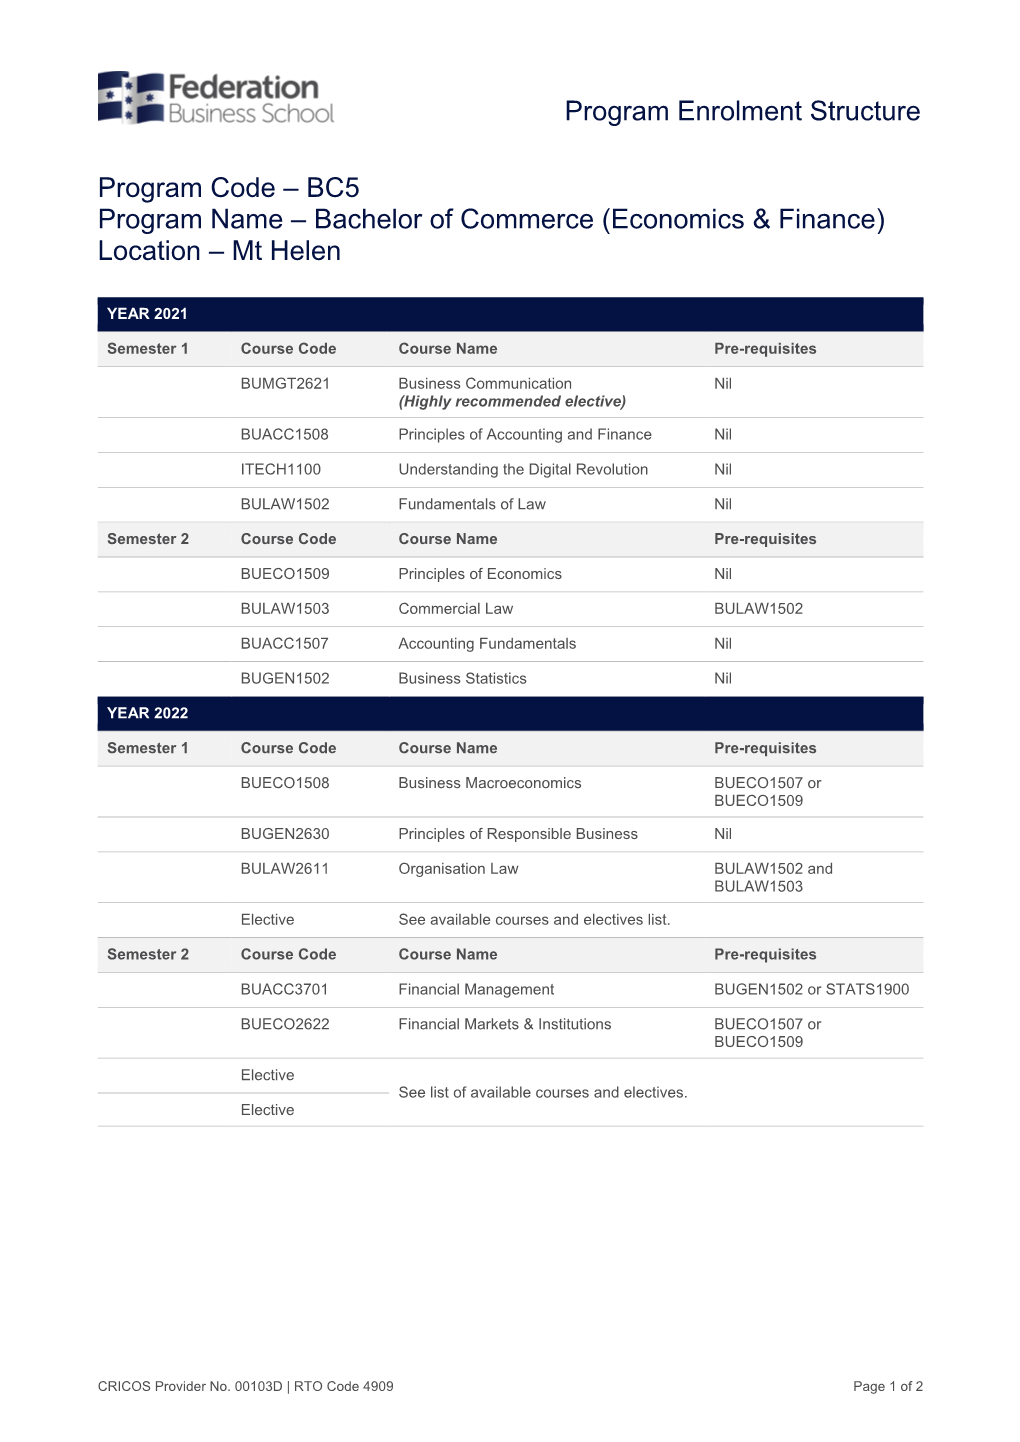 BC5 Program Name – Bachelor of Commerce (Economics & Finance)